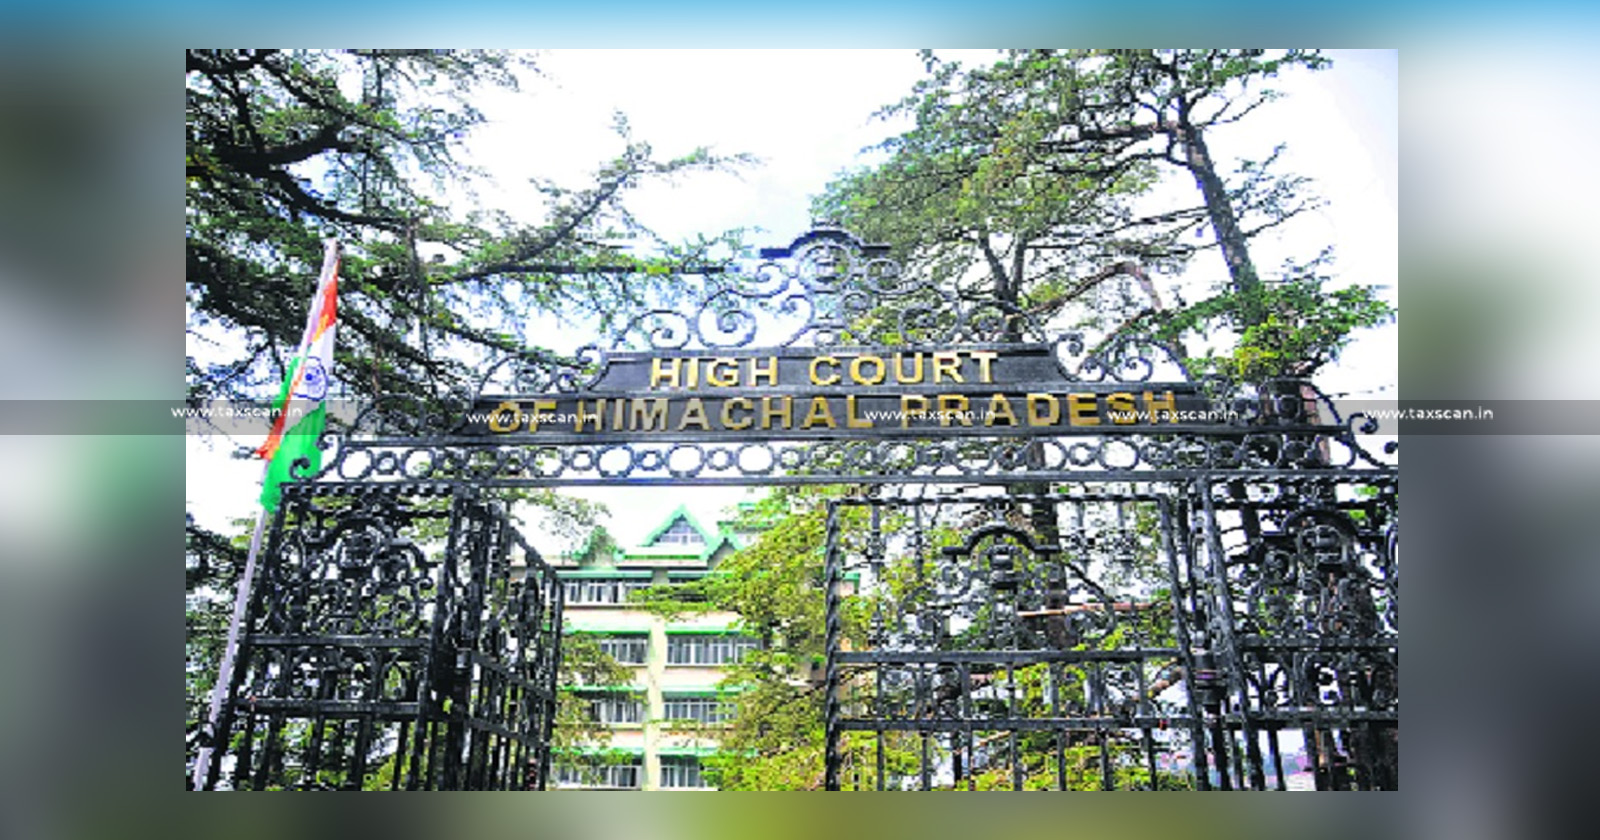 Excise - Revenue - Creditors Debt - HP High Court - Himachal Pradesh High Court - Secured Creditors - taxscan